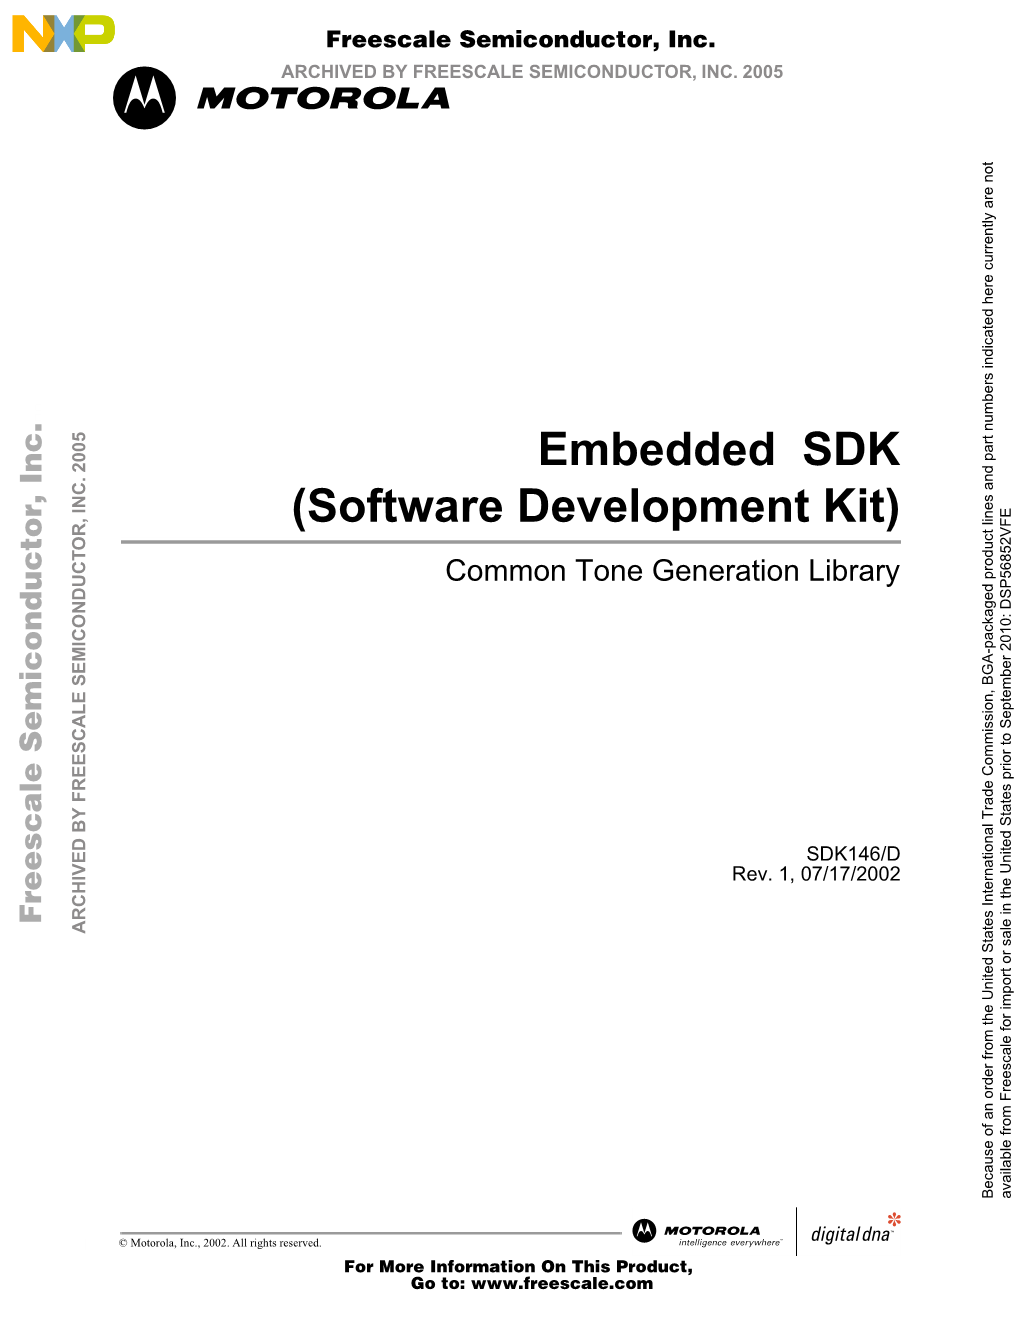 SDK146 Reference Manual